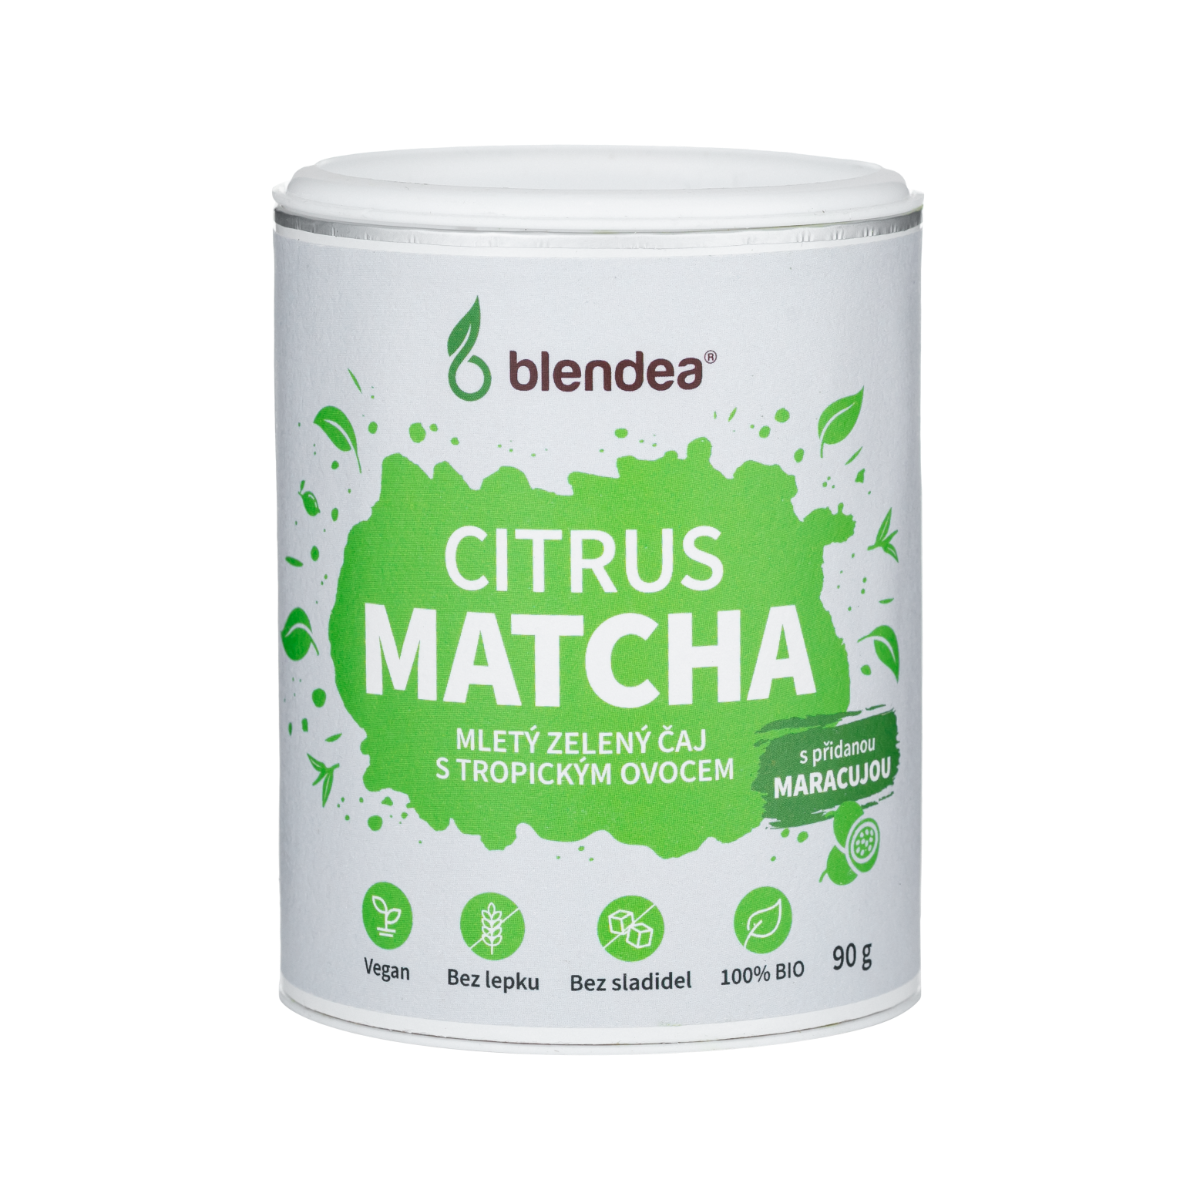 Blendea Citrus Matcha 90 g Blendea